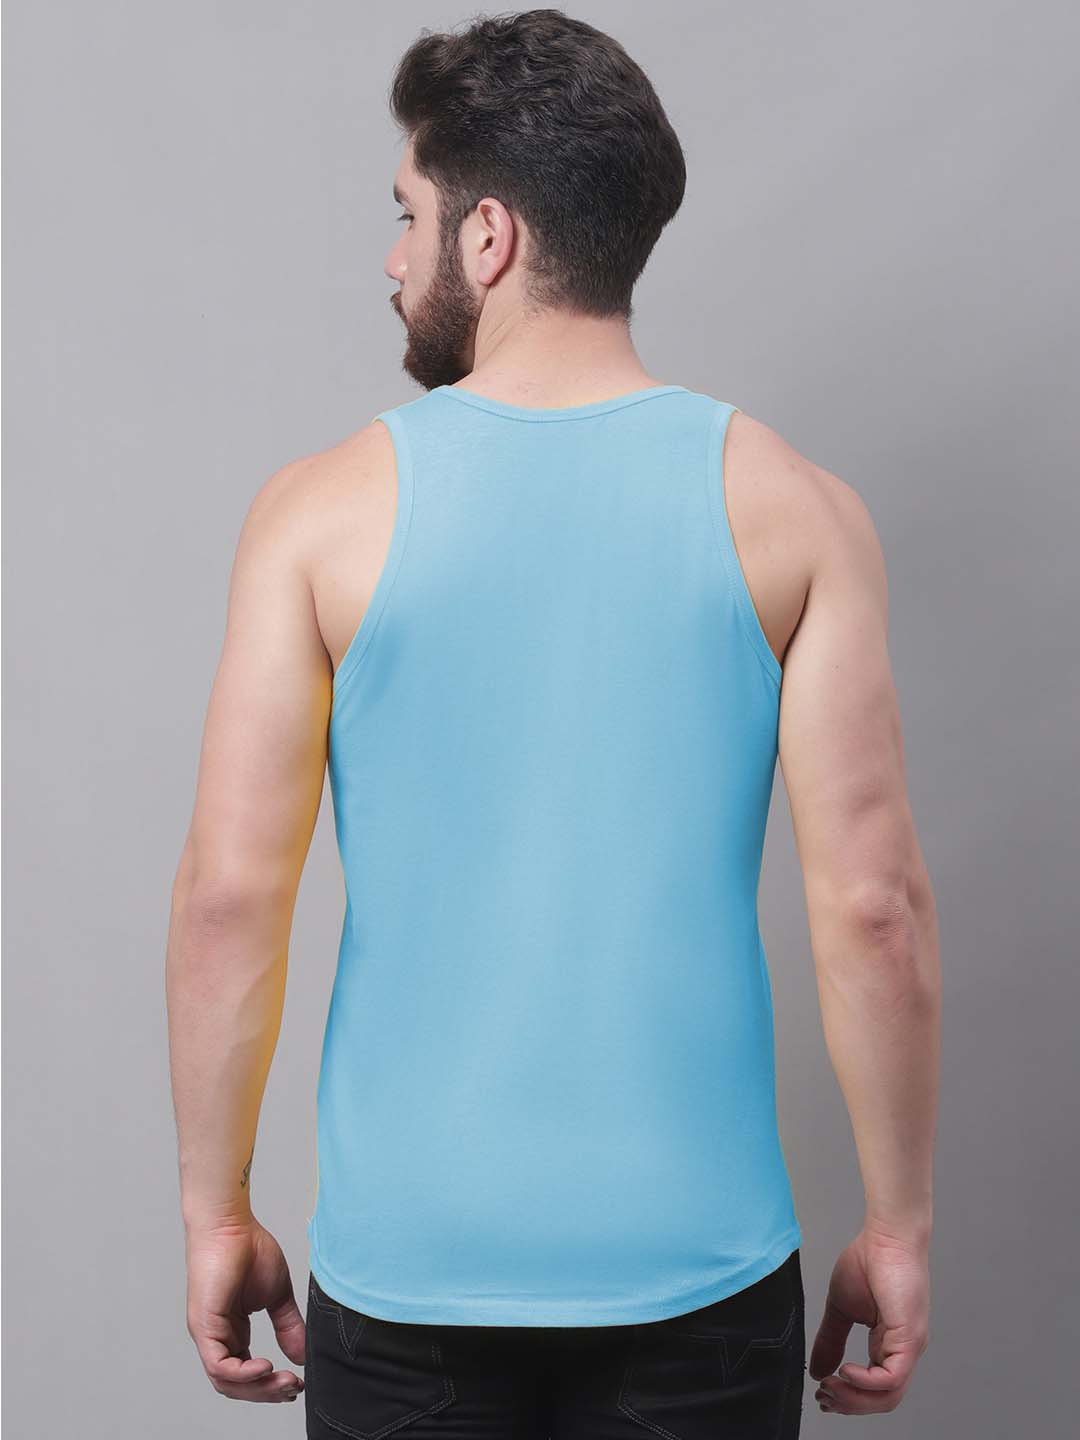 Men's System Phad Denge Printed Innerwear Gym Vest - Friskers